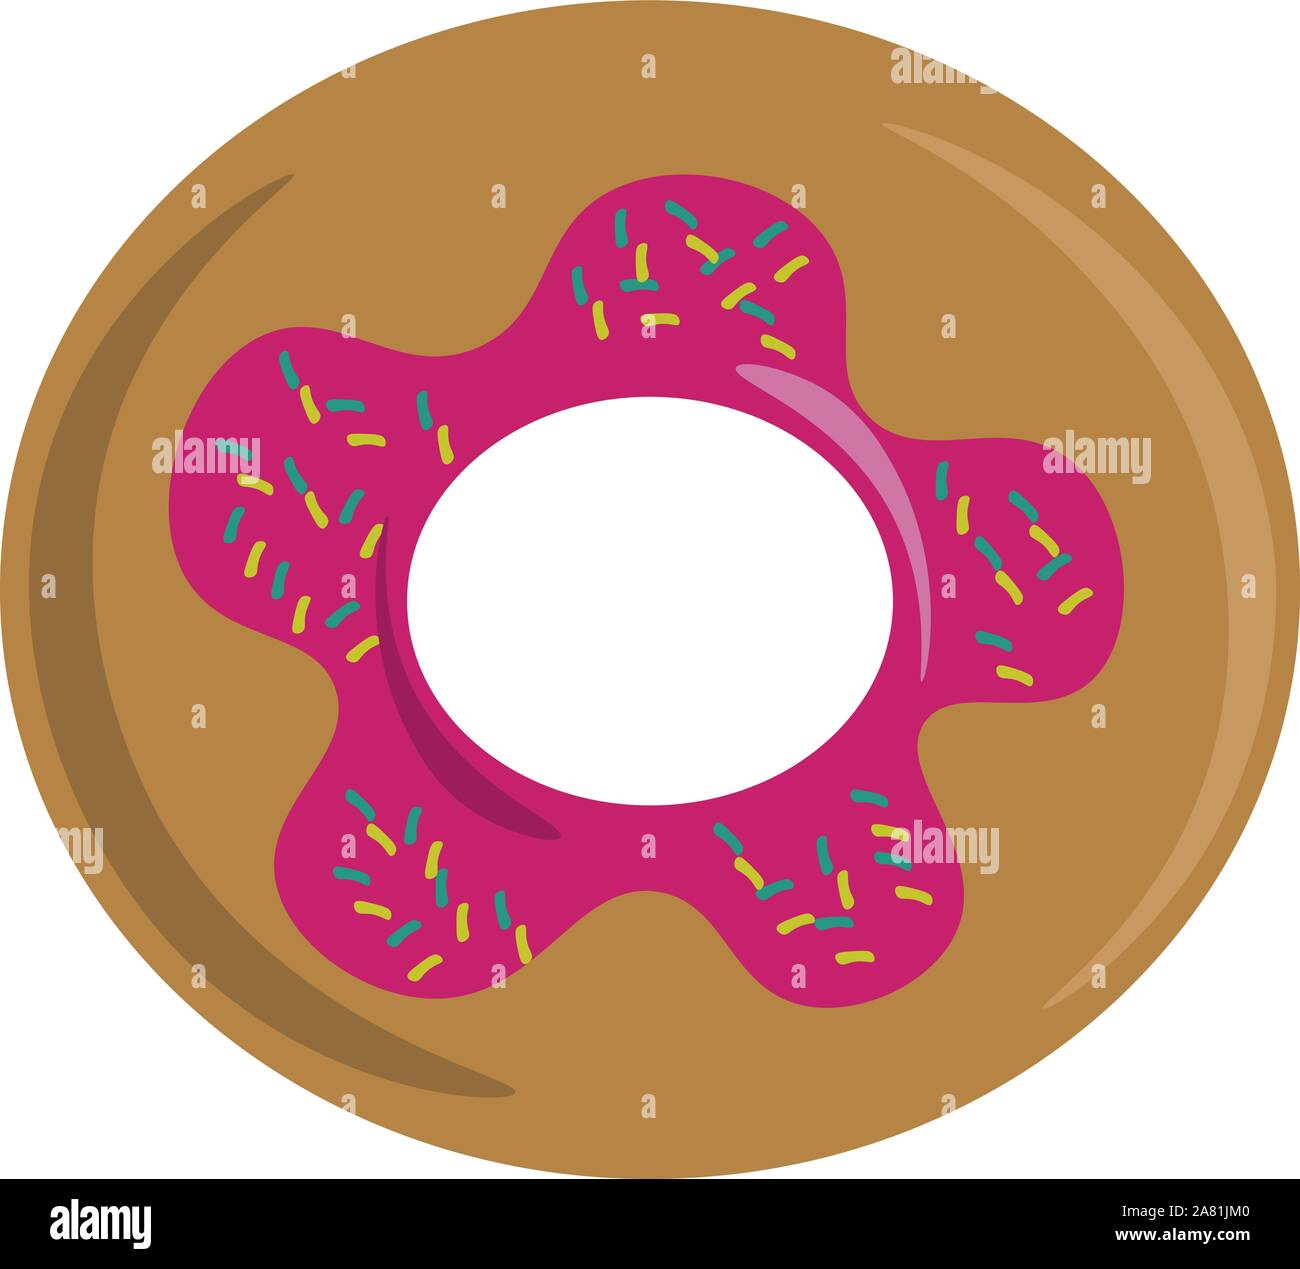 Round donut, illustration, vector on white background. Stock Vector